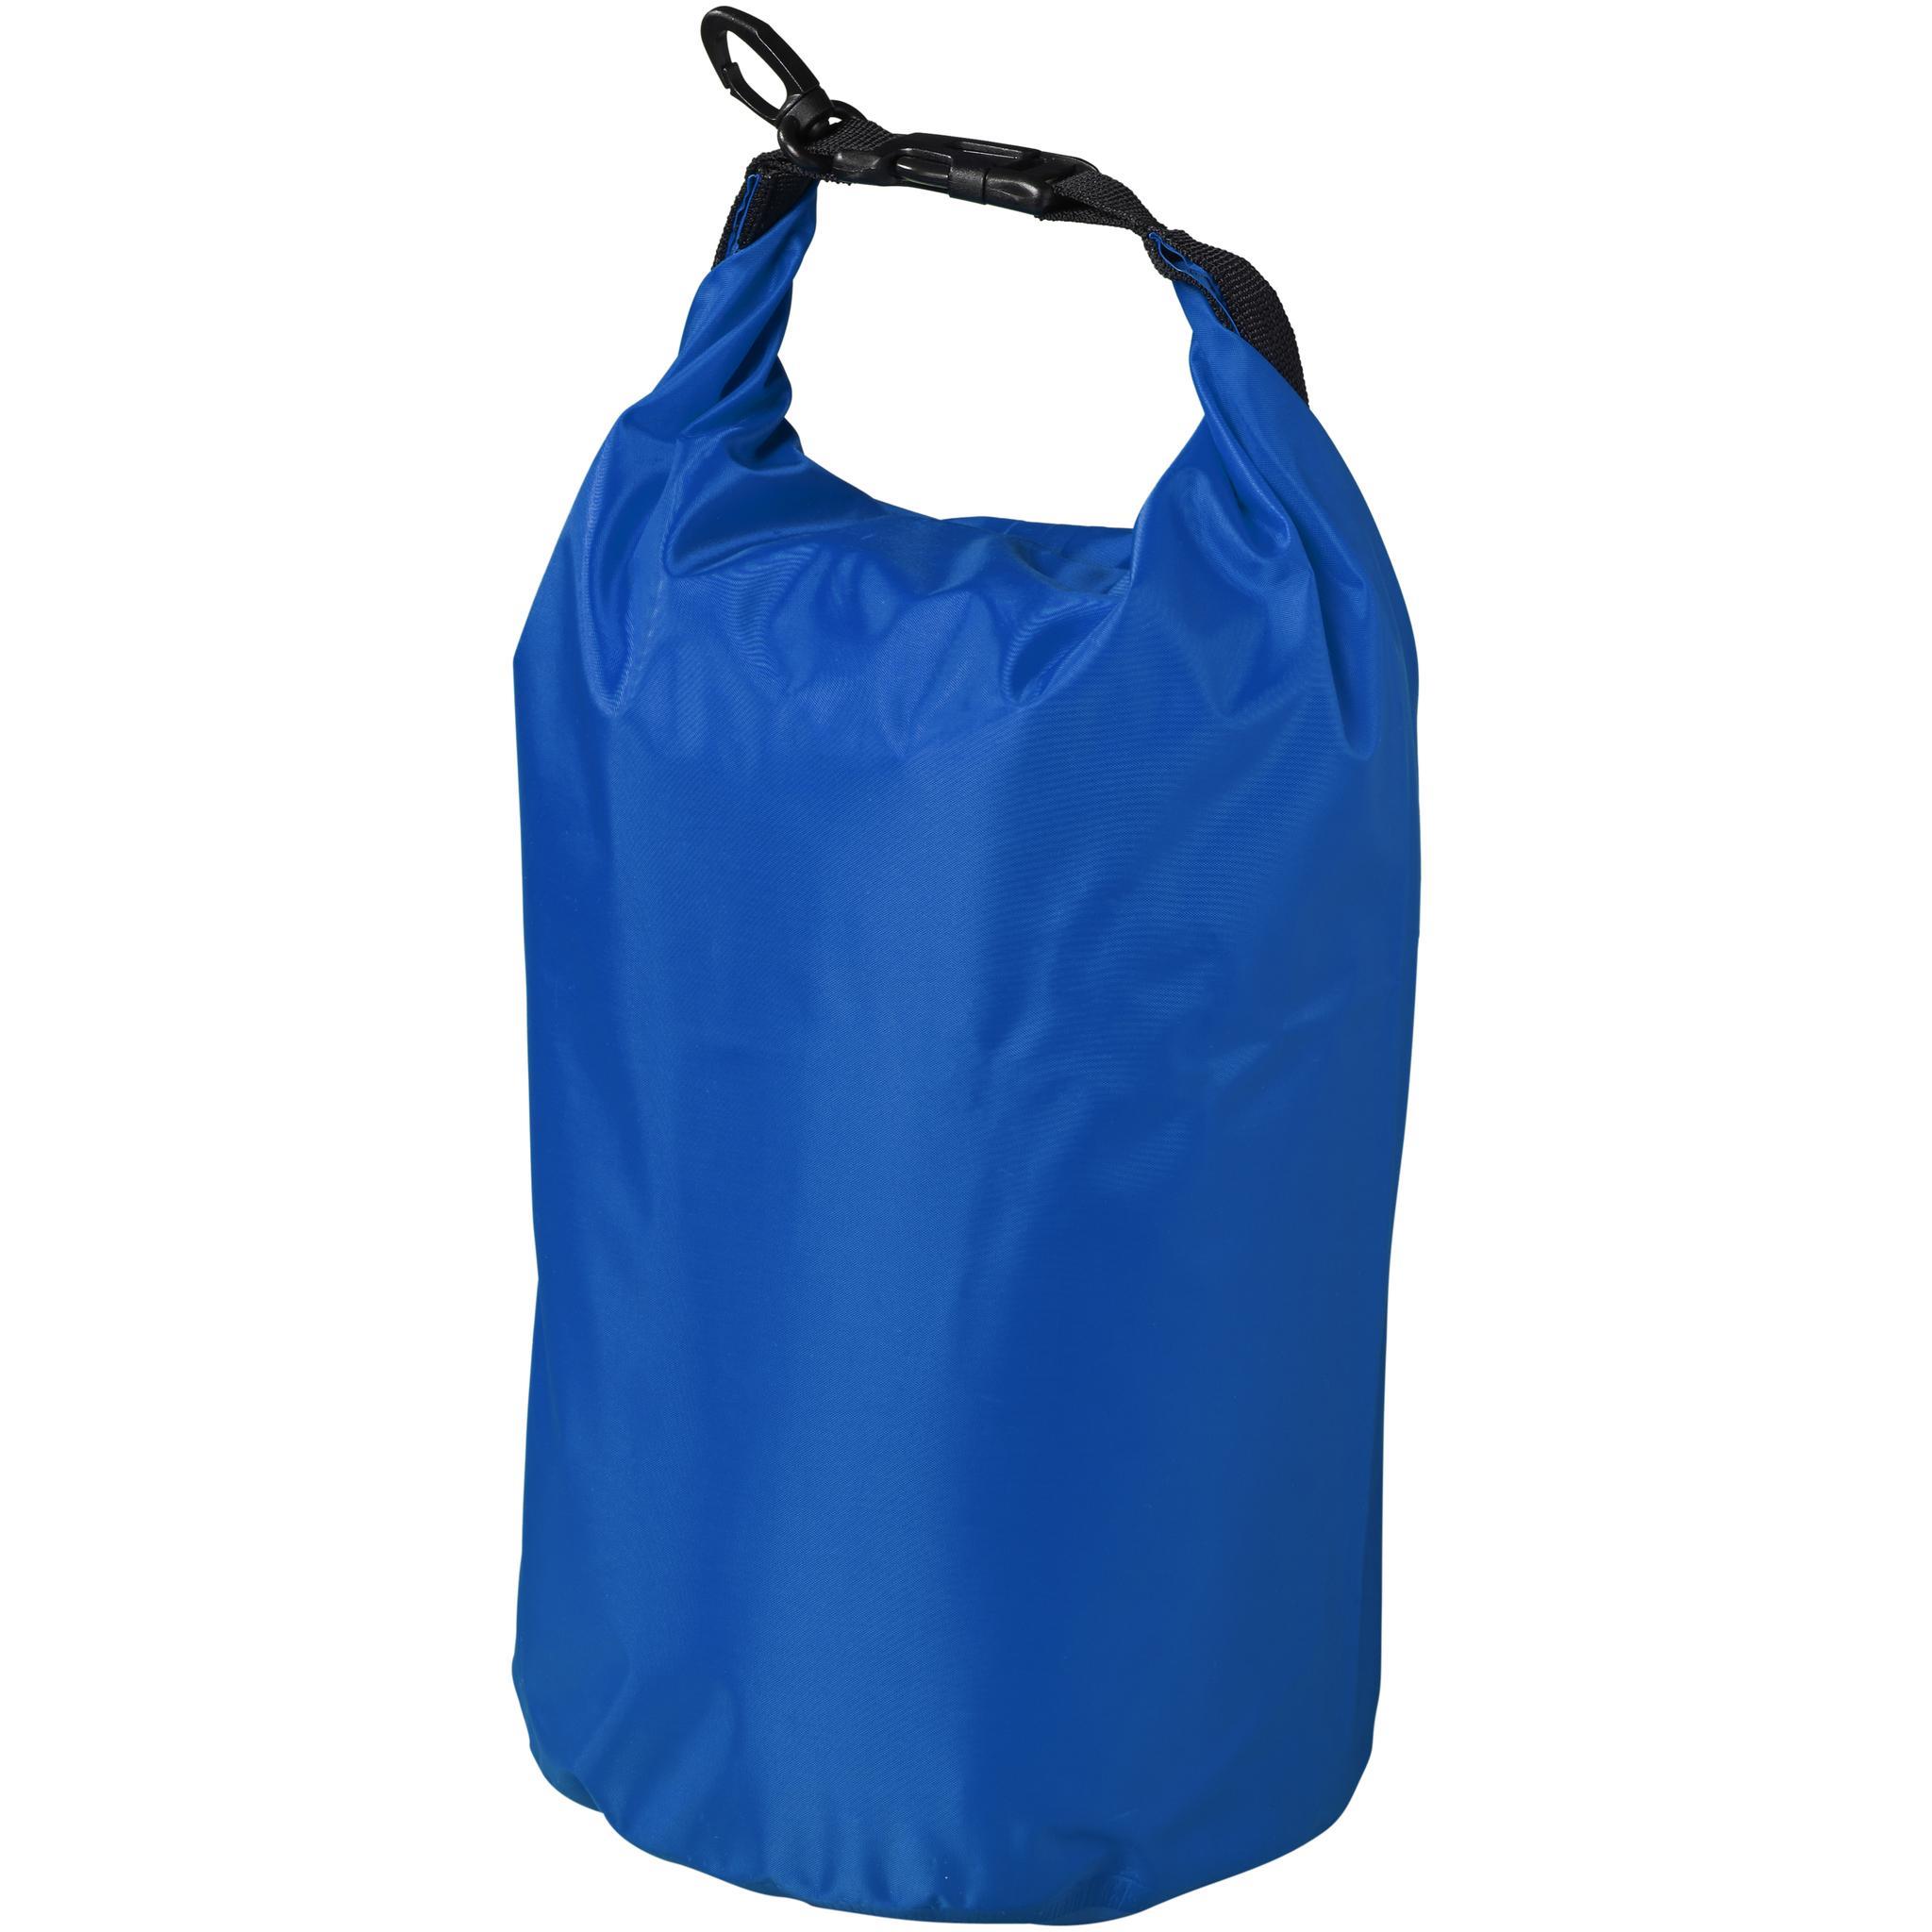 Bullet The Survivor Waterproof Outdoor Bag (Royal Blue) (35.5 x 17.5 cm)